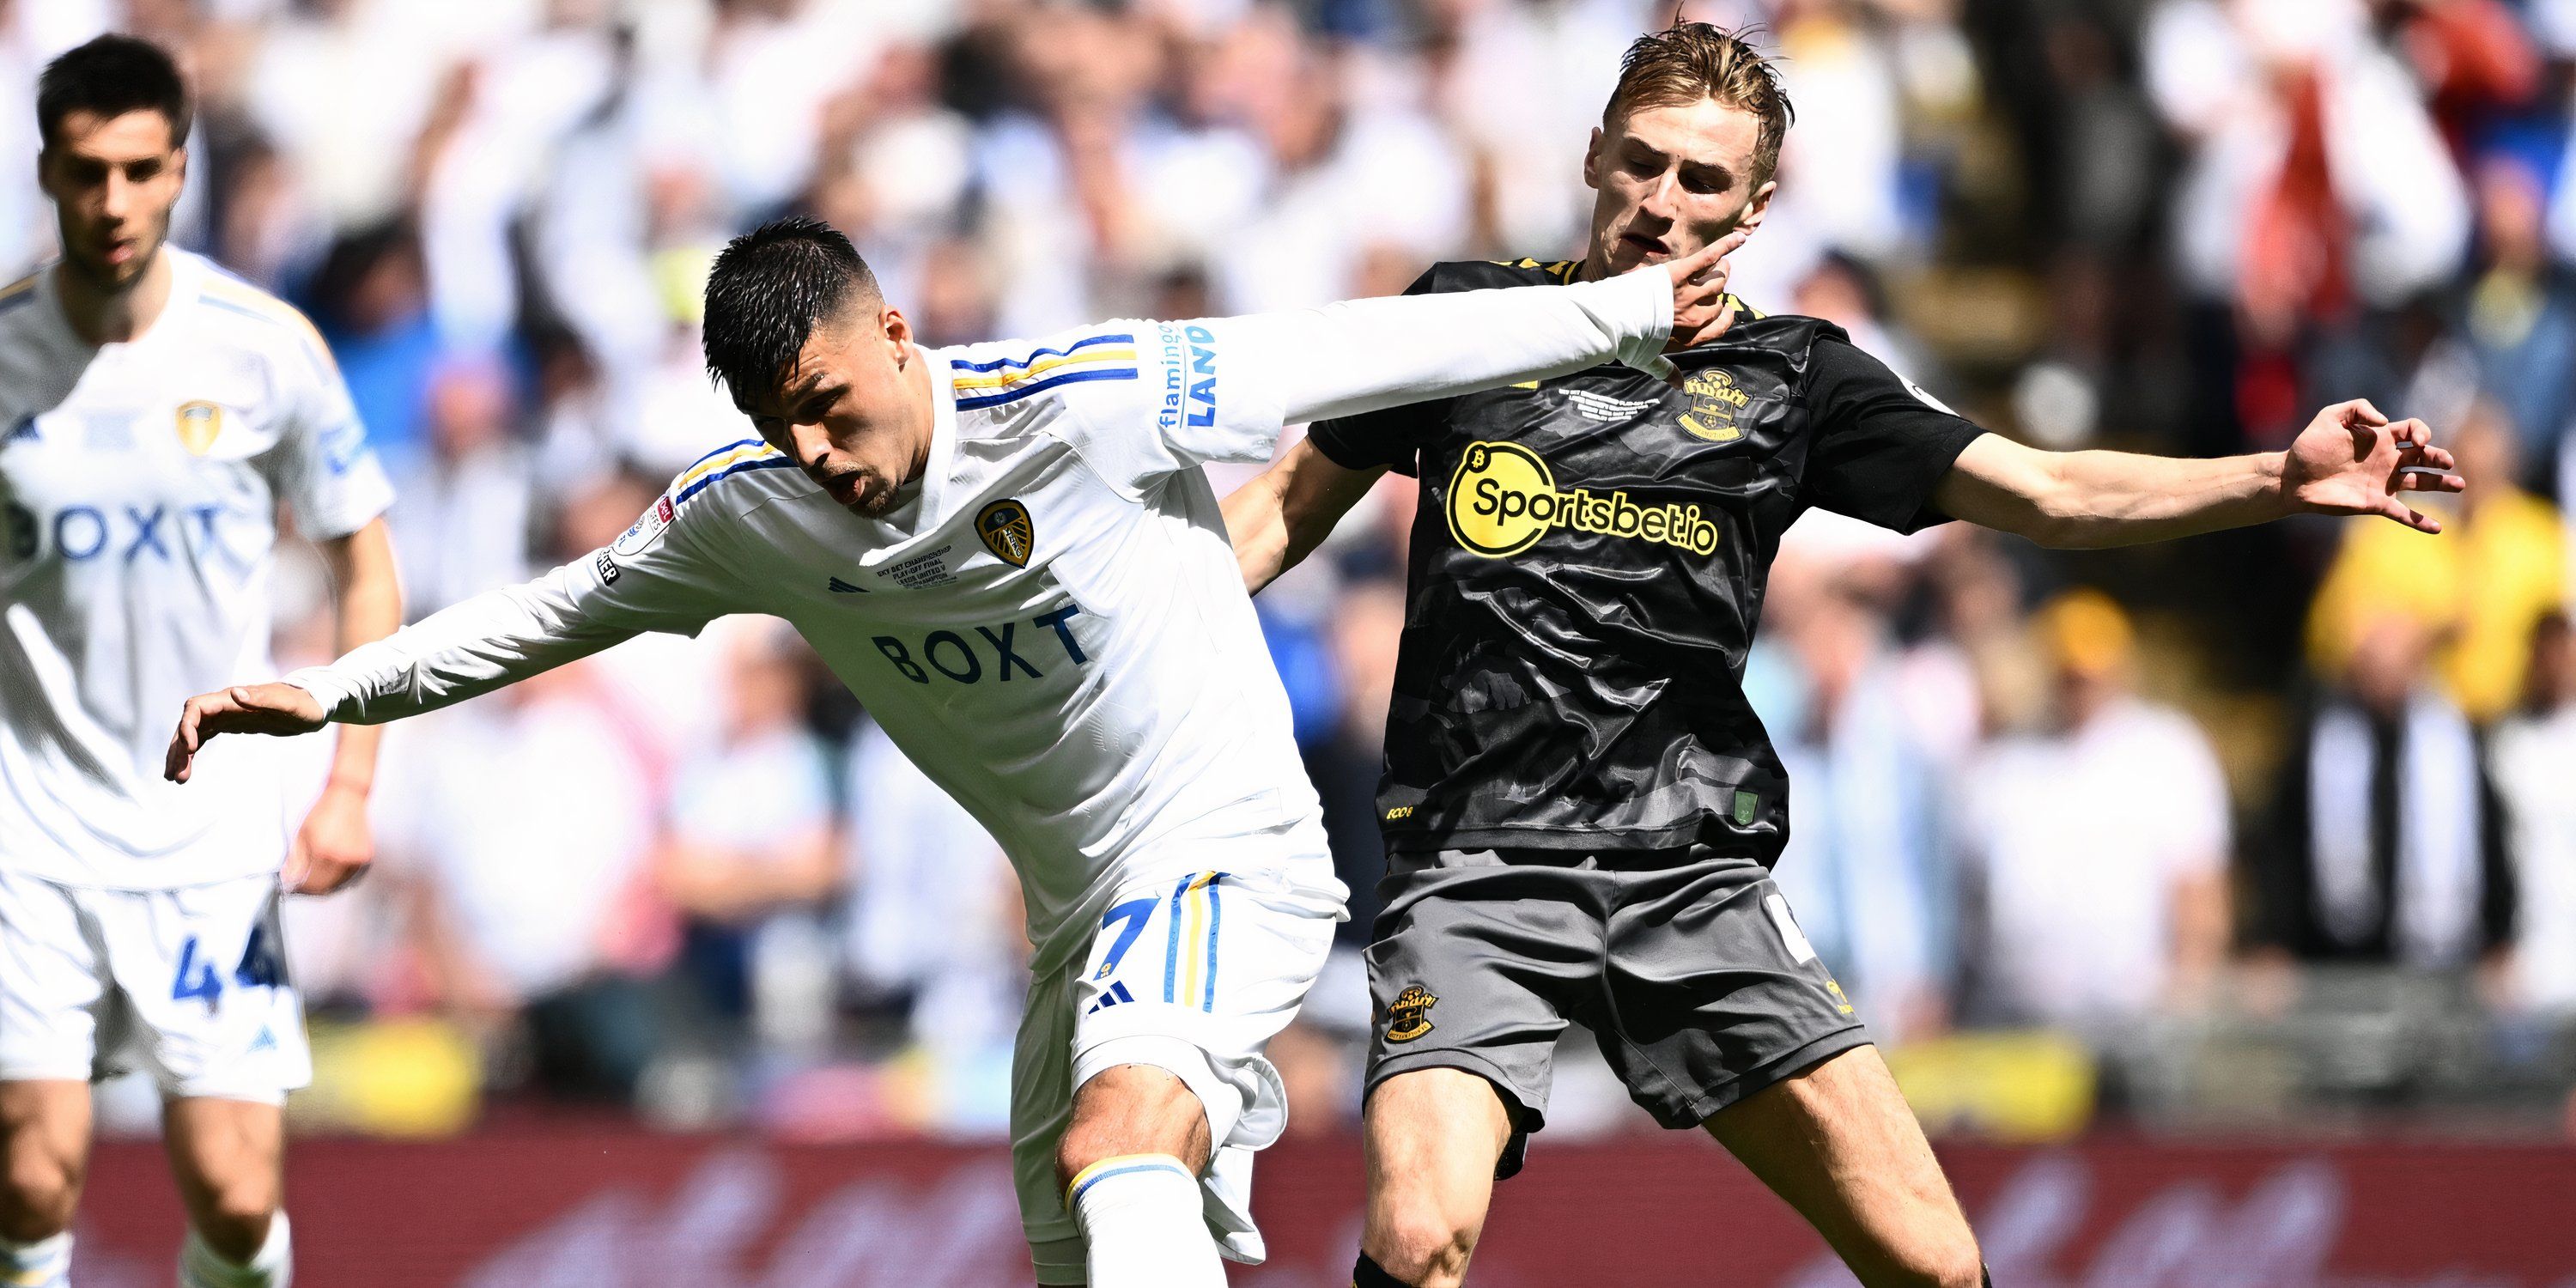 Southampton midfielder Flynn Downes battling with Leeds United striker Joel Piroe for possession